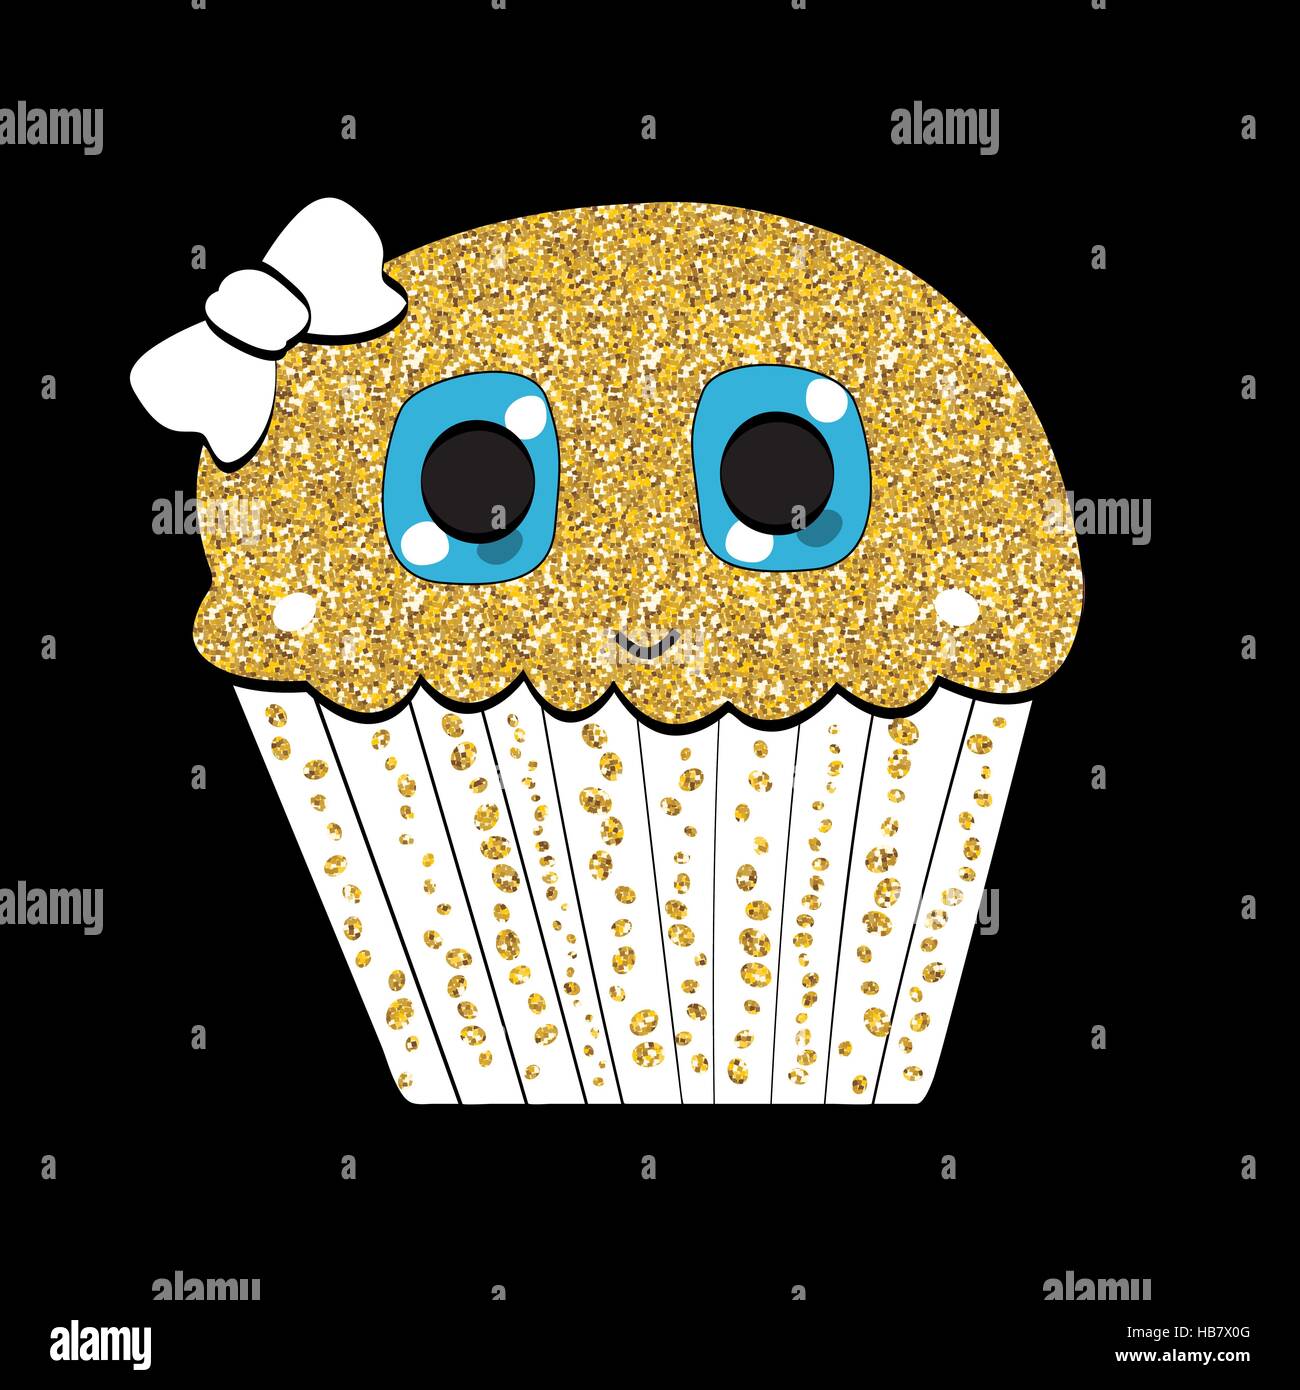 Sweet Tasty Cupcake Vector Illustration Stock Vector